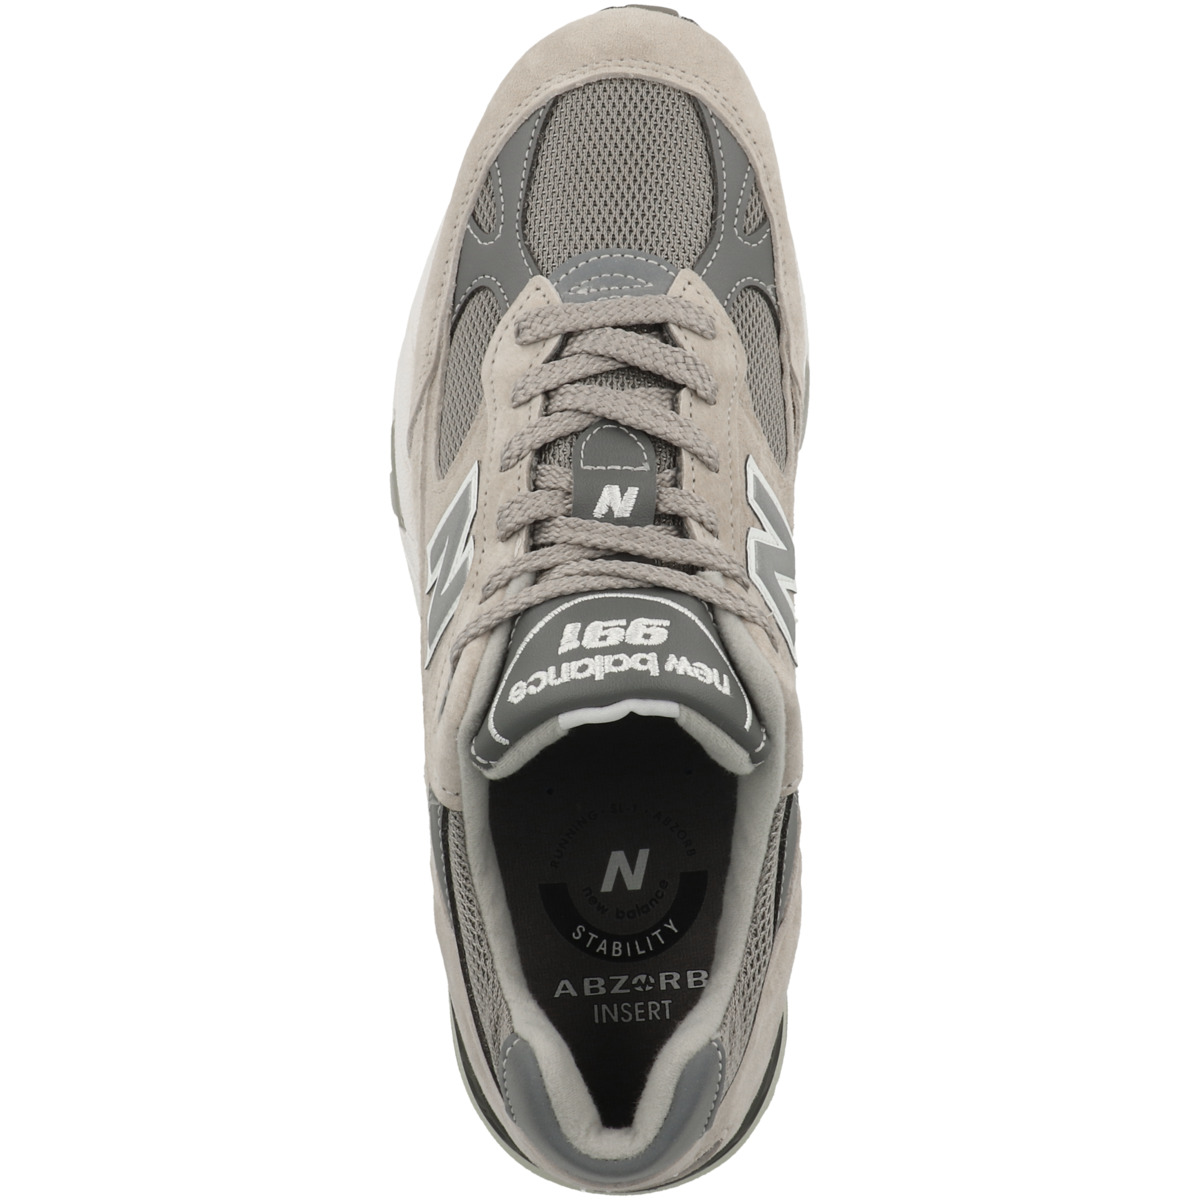 New Balance M 991 GL Made in UK Sneaker grau